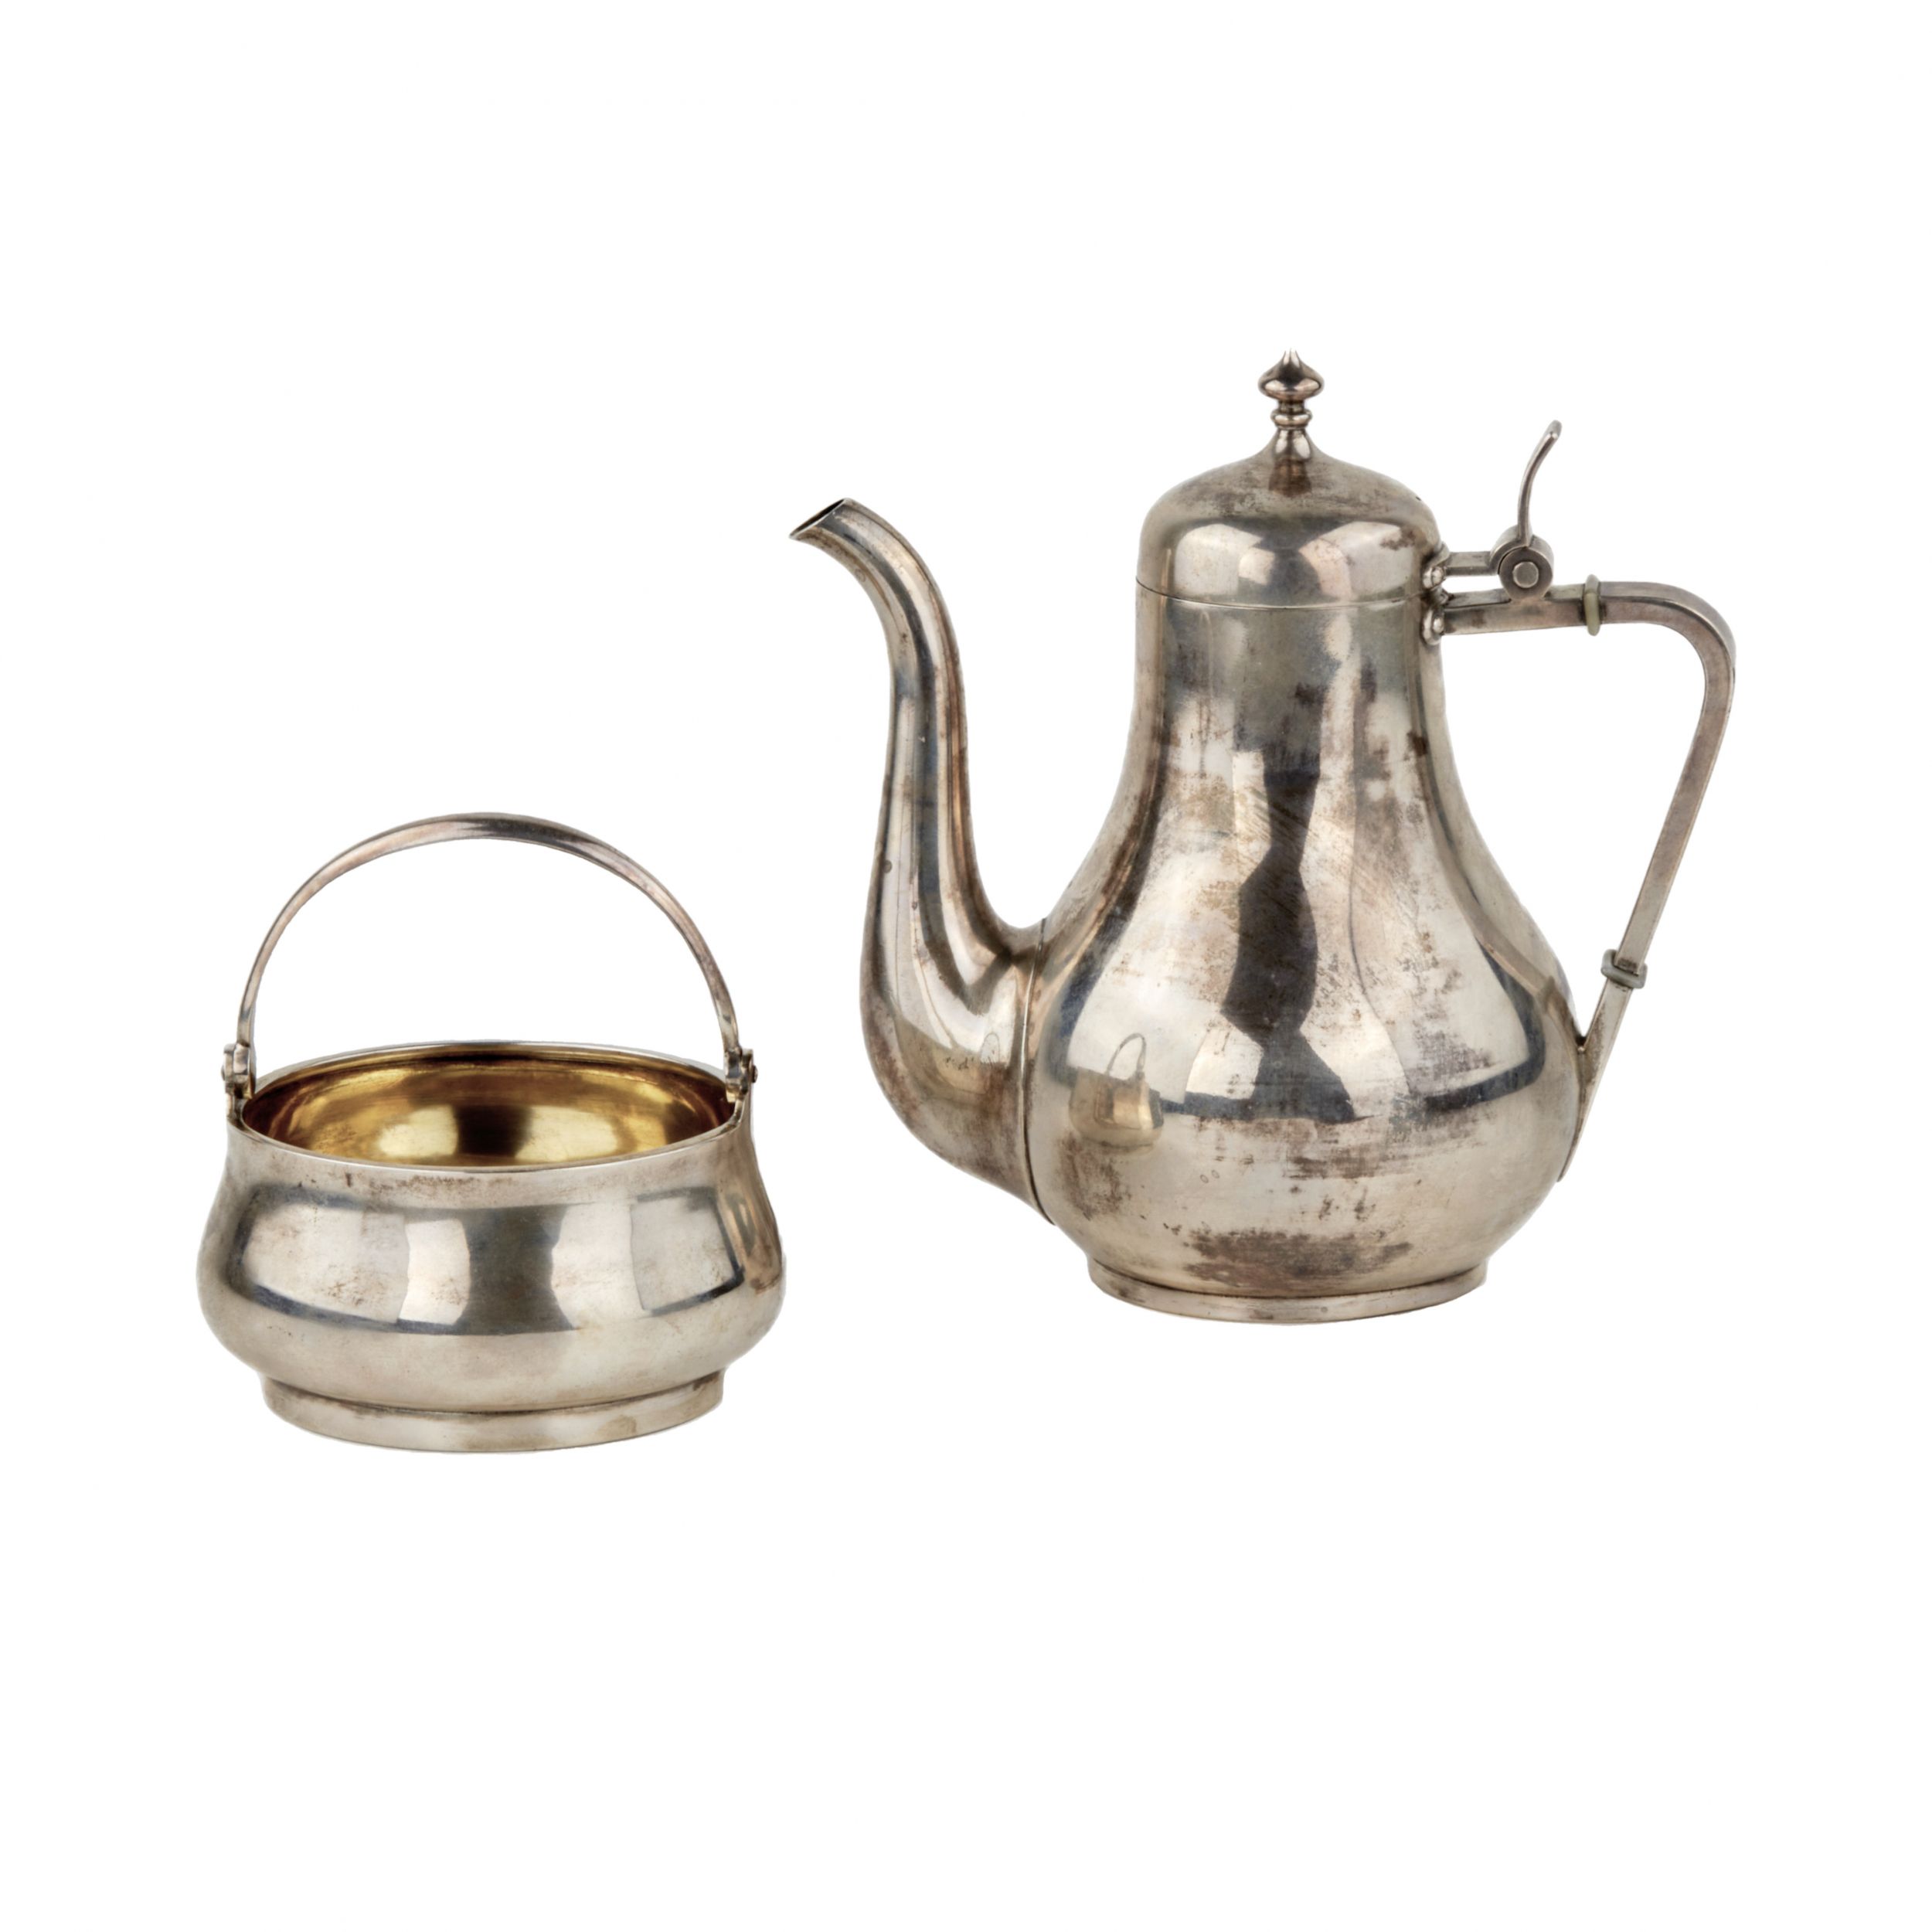 Silver-teapot-and-sugar-bowl-by-P-Ovchinnikov-